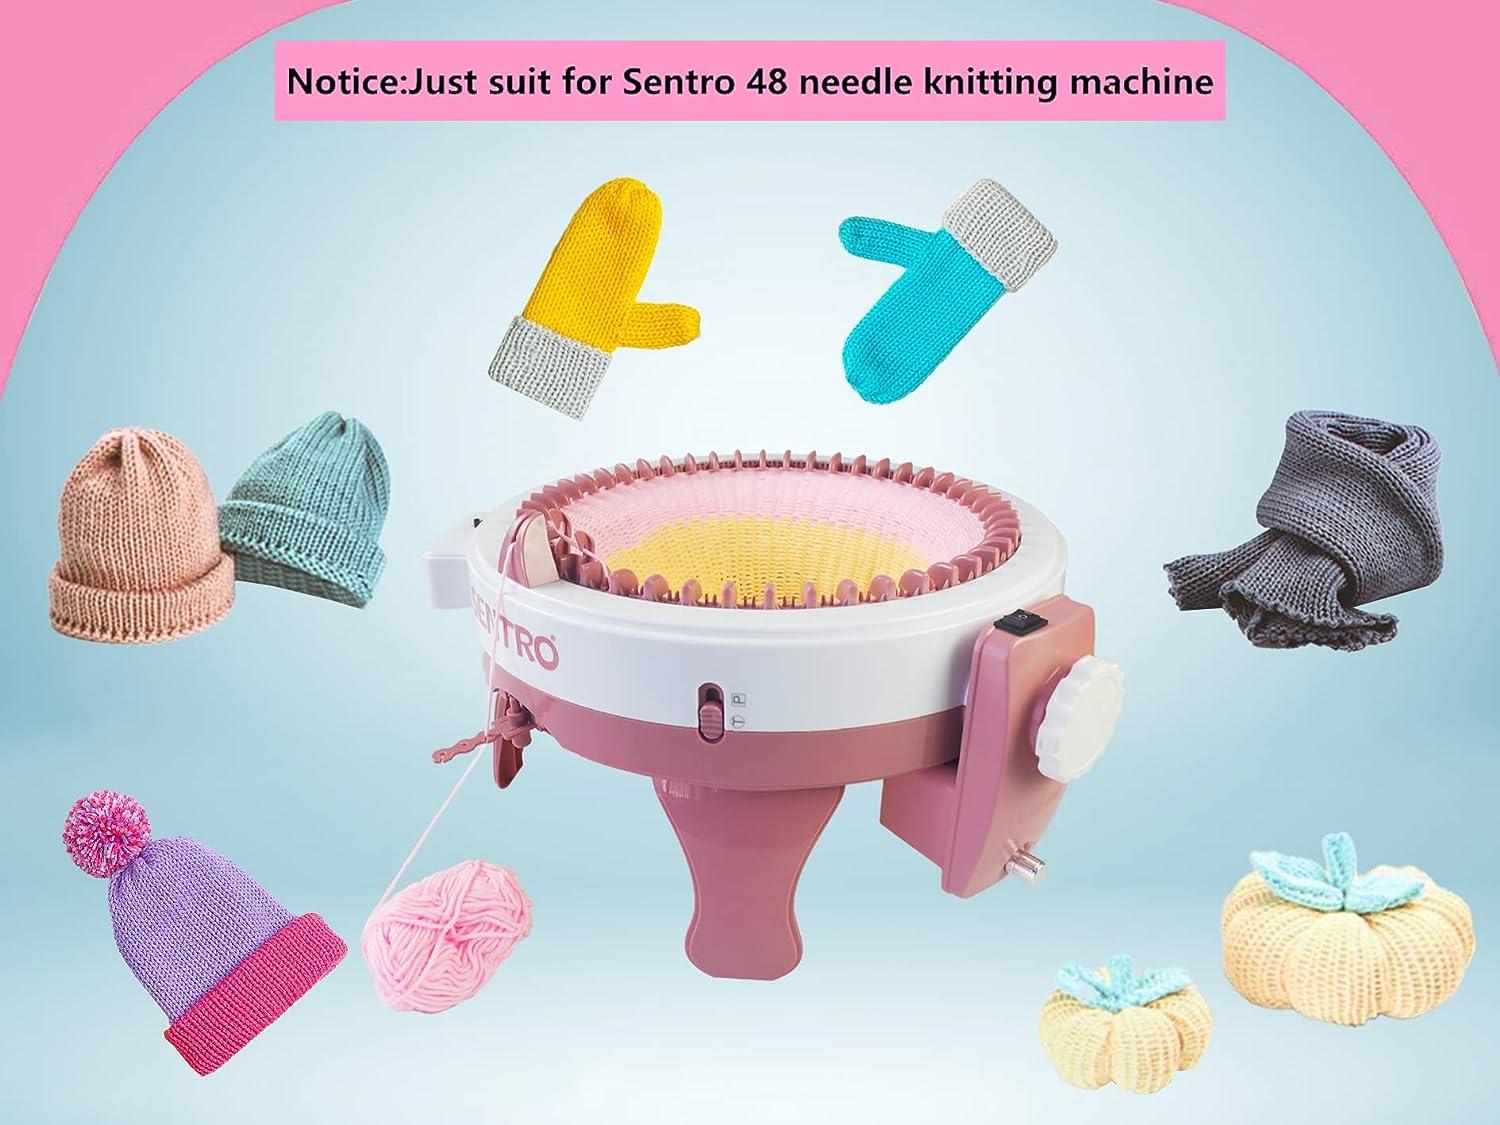 Sentro 48 Knitting Machine Needles - The Knitting Enthusiast